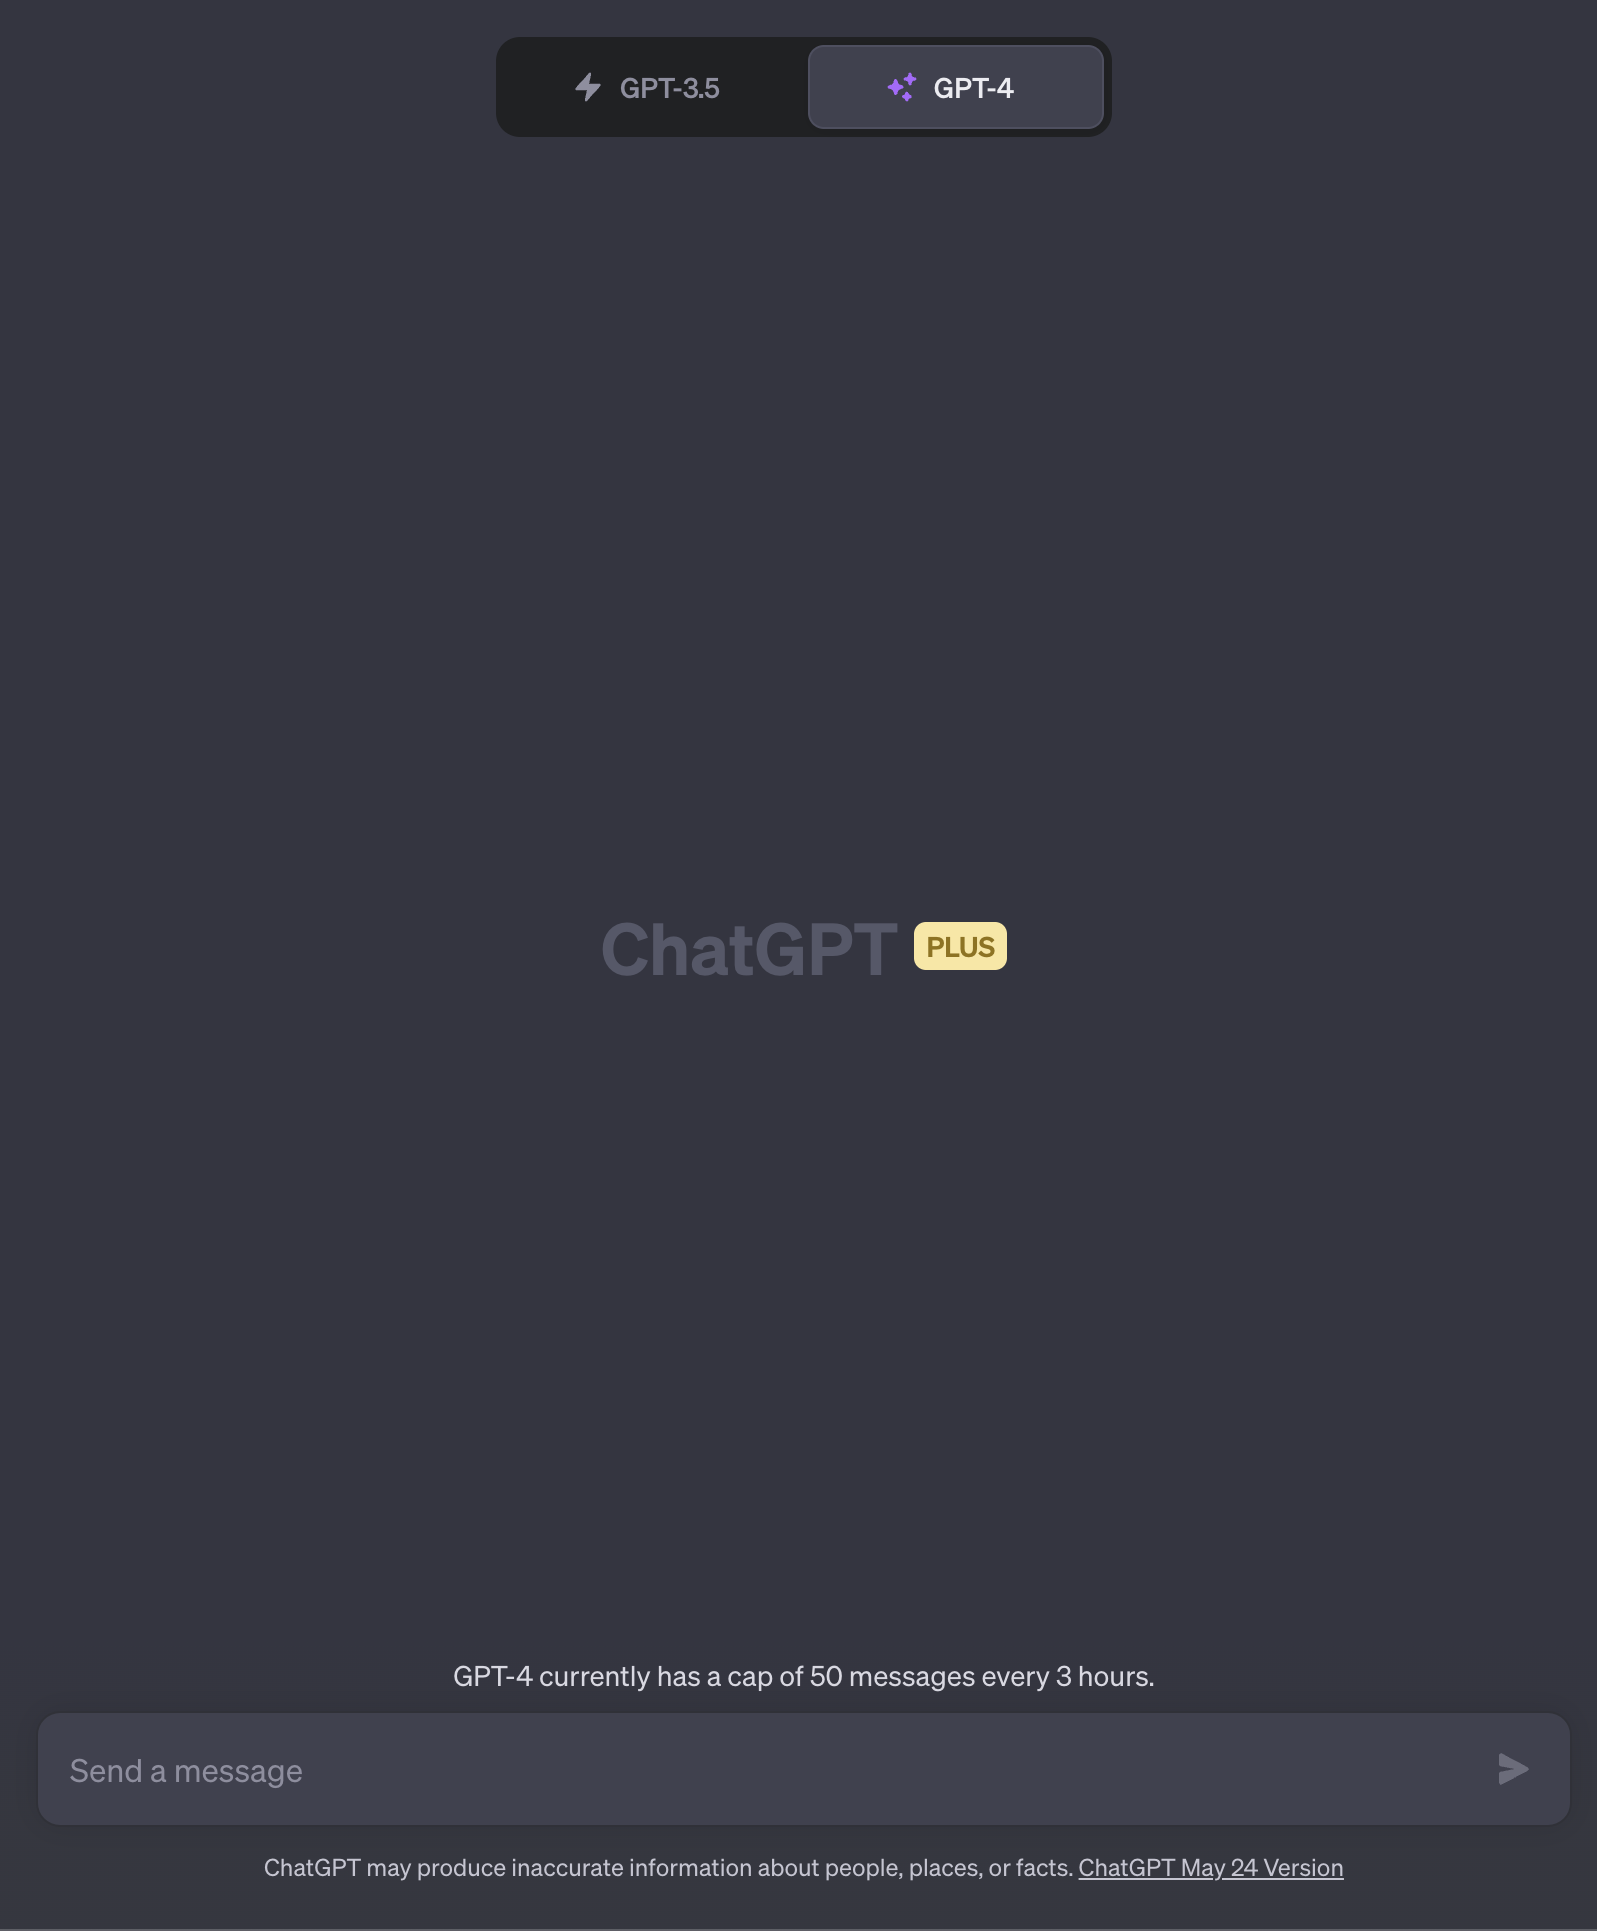 OpenAI سقف پیام GPT-4 را برای کاربران ChatGPT Plus به 50 افزایش می دهد